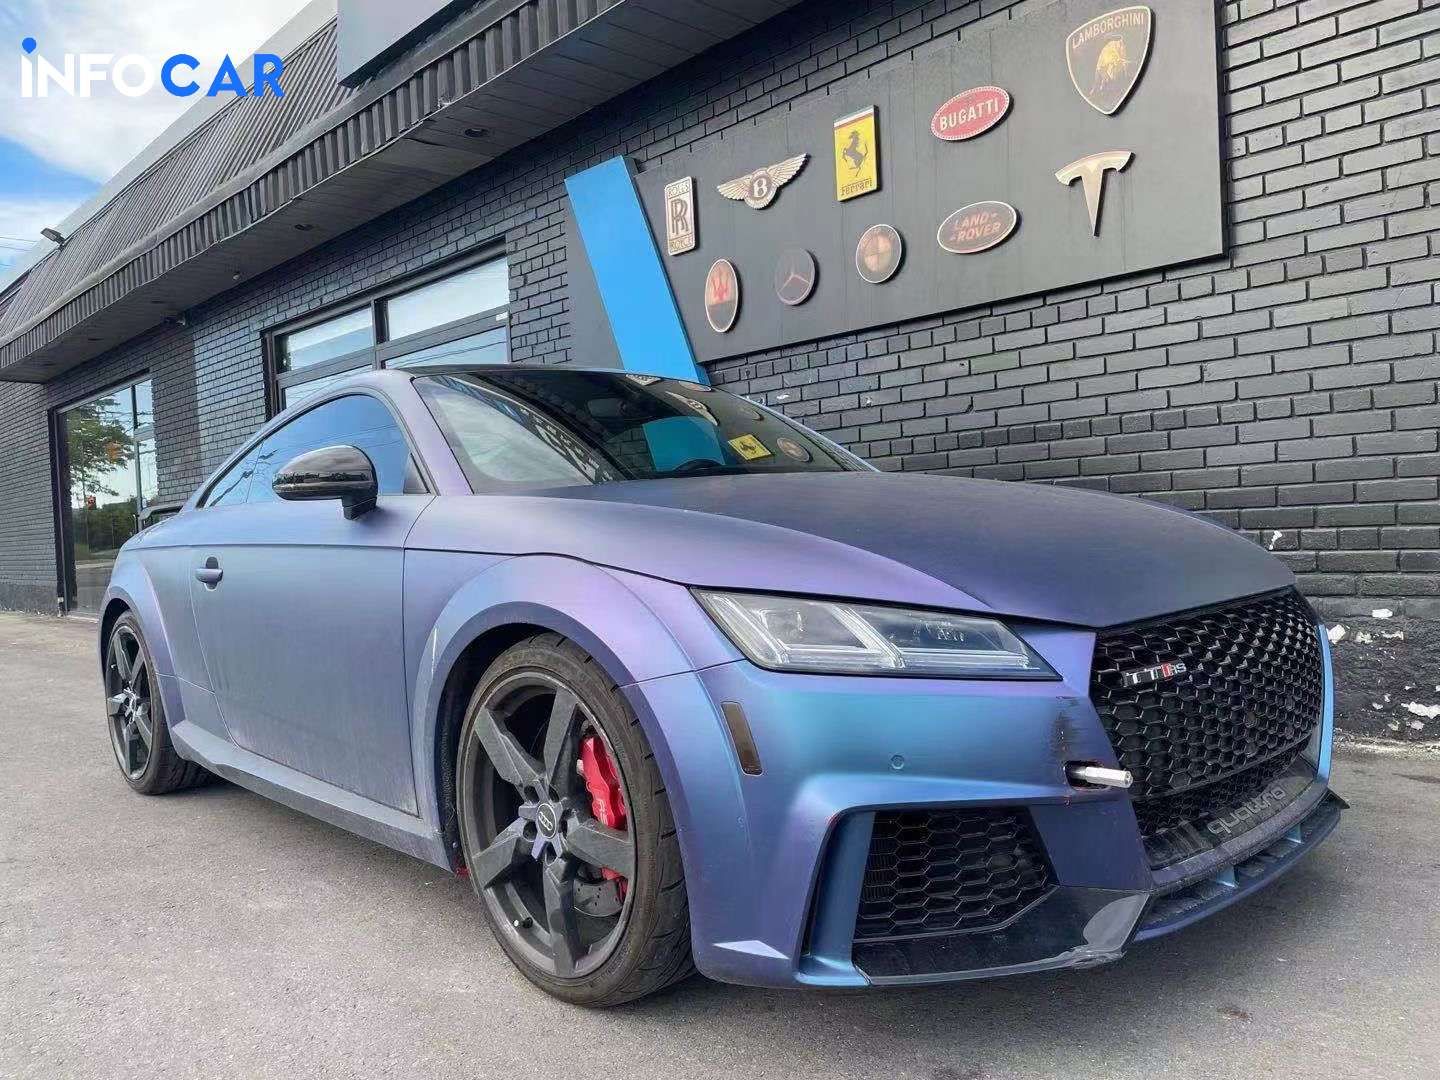 2018 Audi TT TTRS - INFOCAR - Toronto Auto Trading Platform